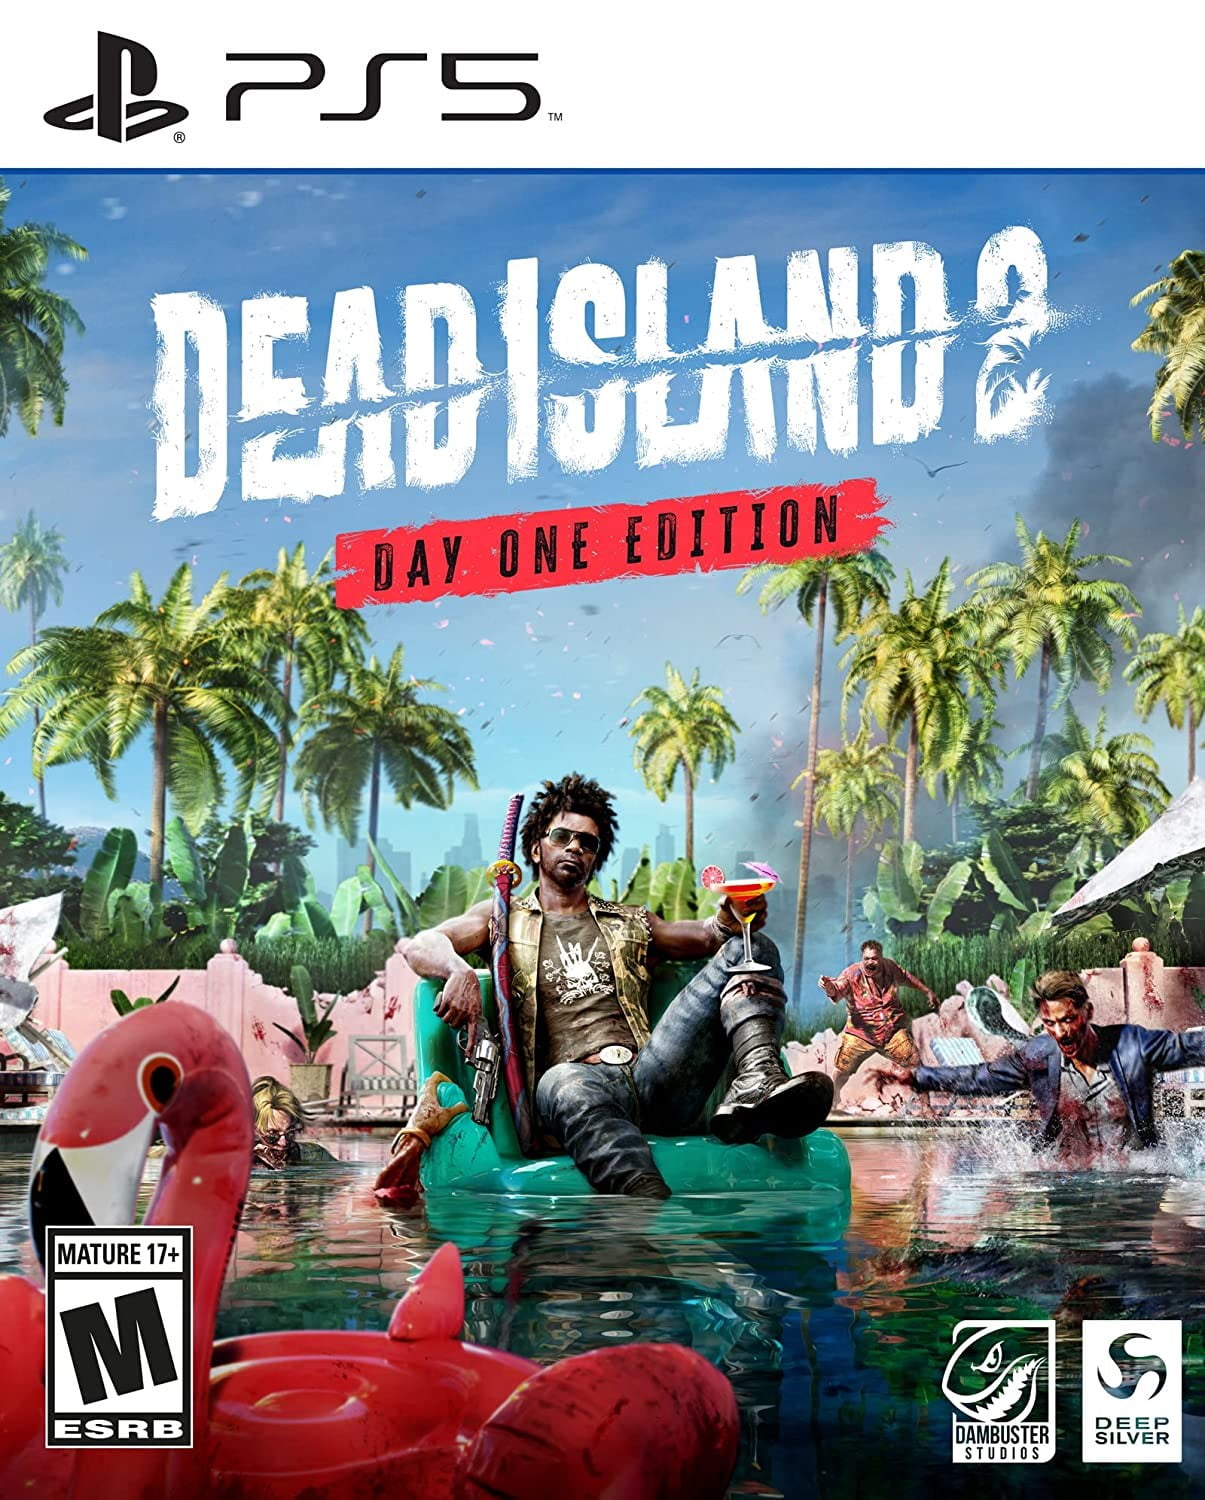 Dead Island: Riptide review